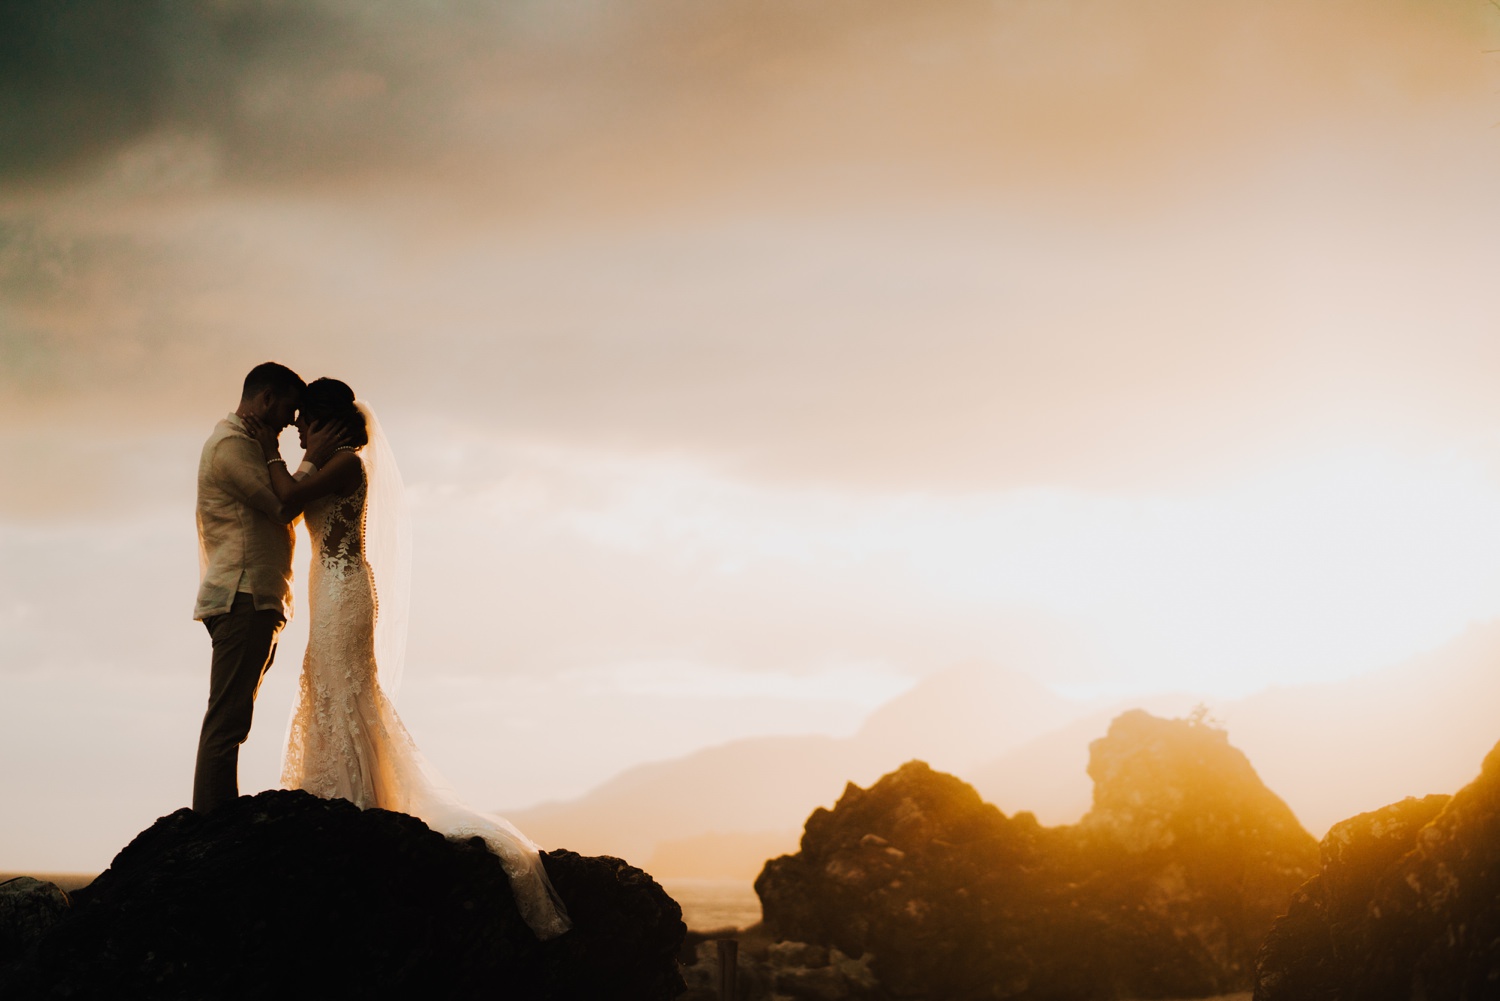 Oak St Studios - Mabel and Tyler - Batangas Beach Wedding Photographer